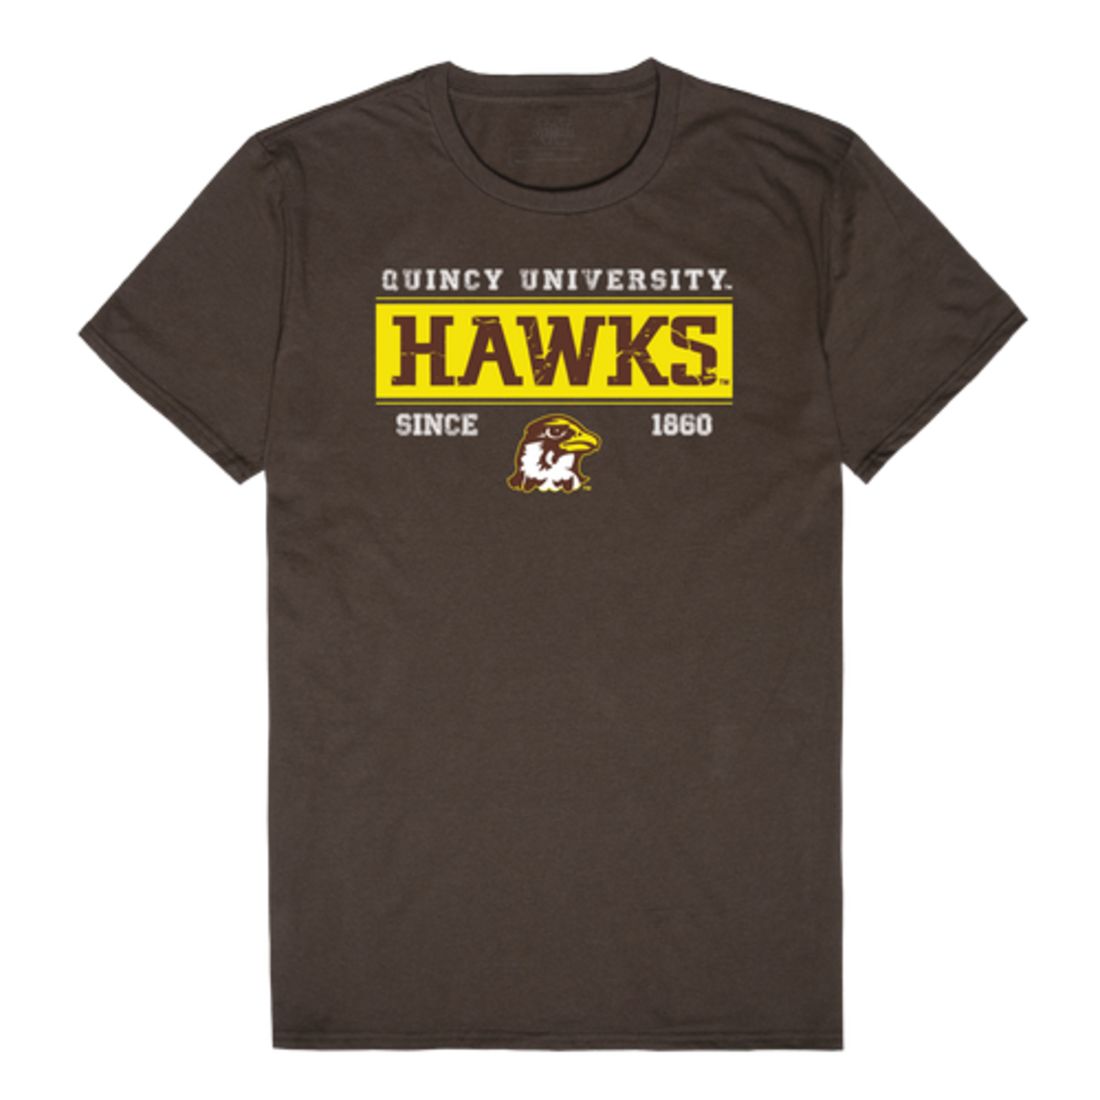 Quincy University Hawks Established T-Shirt